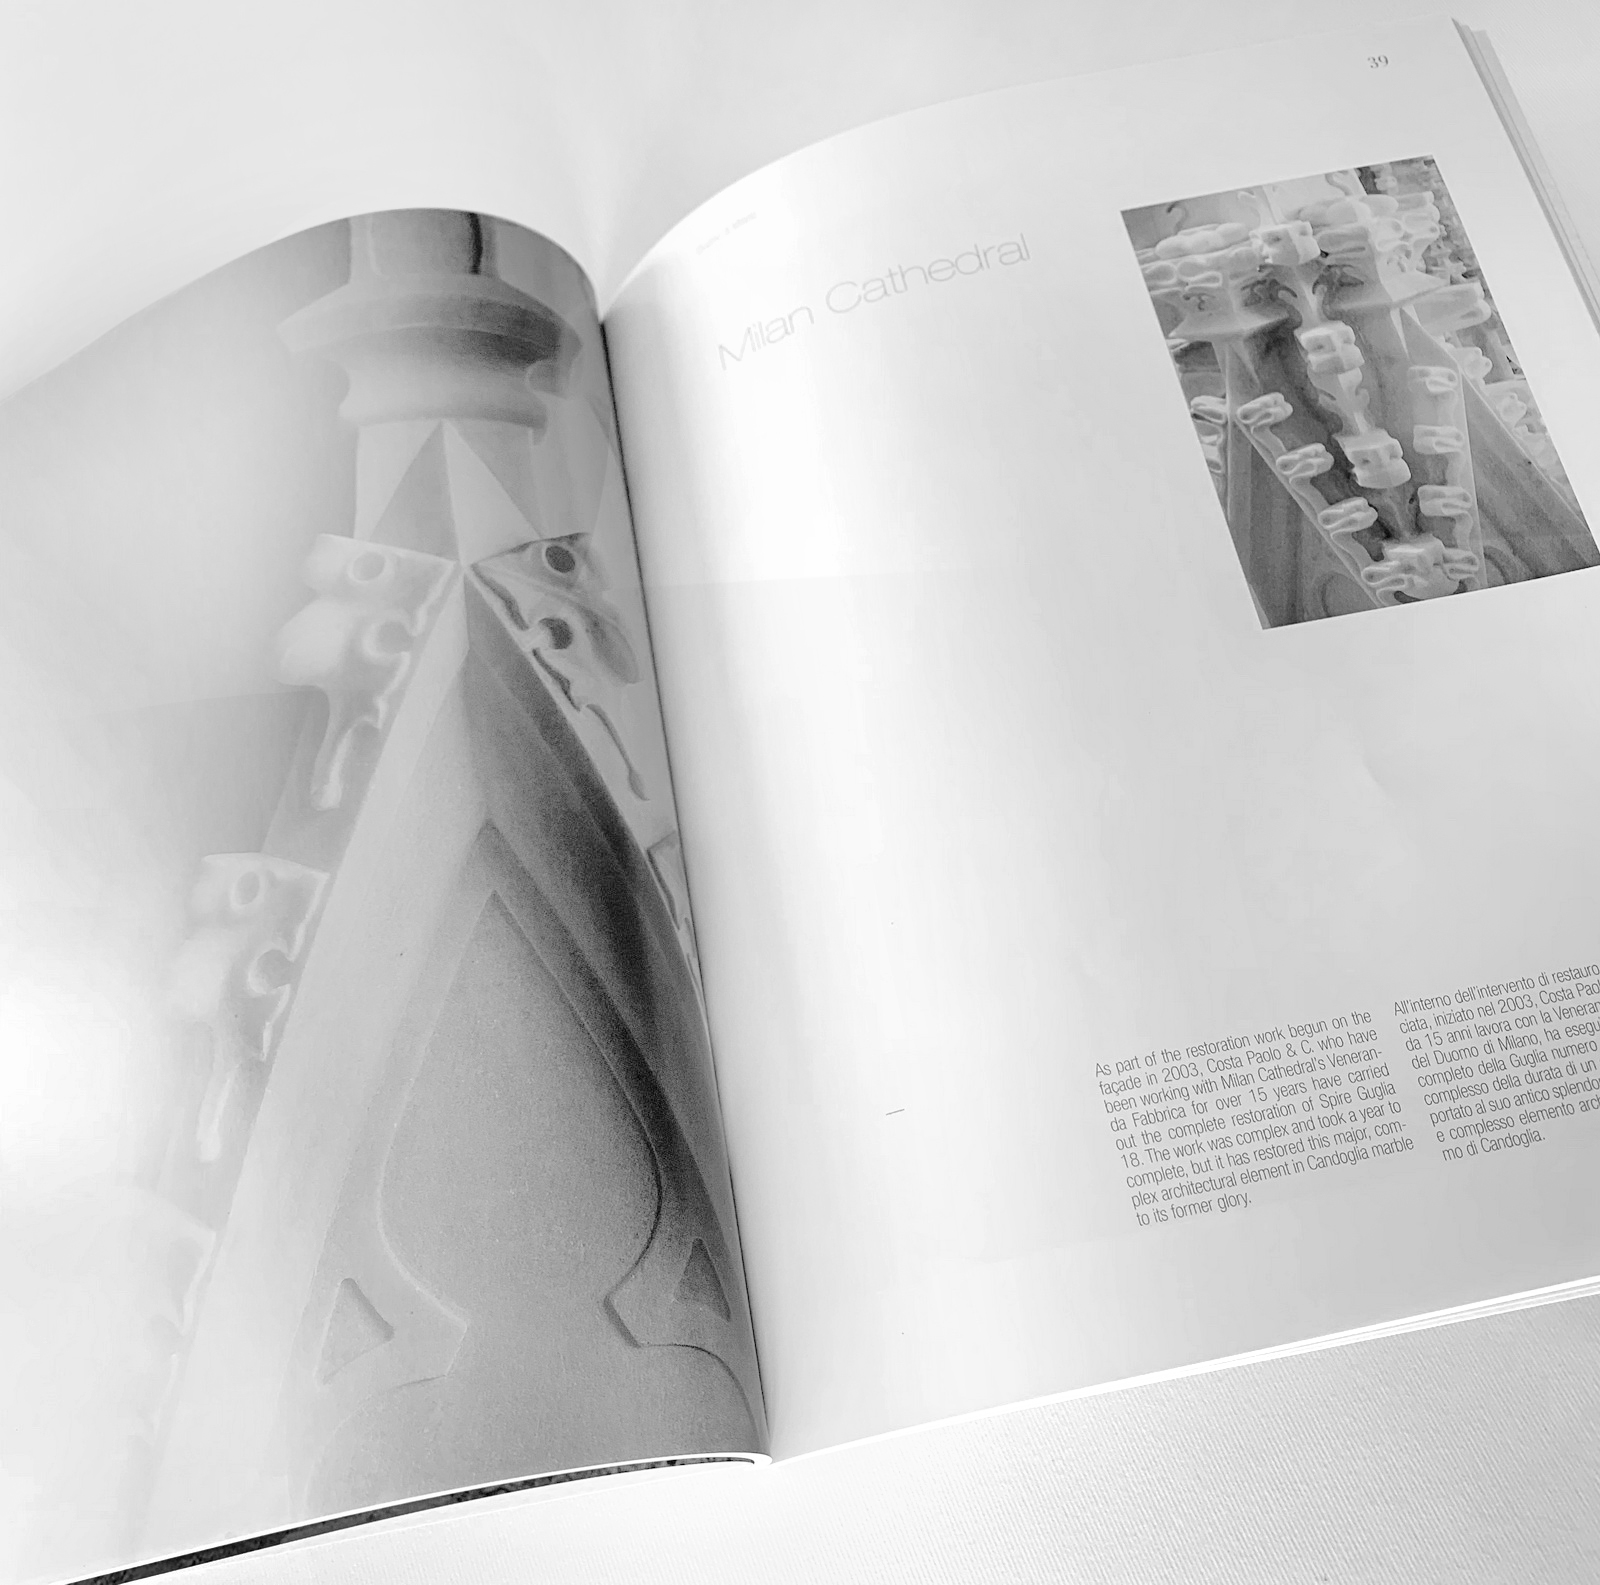 Paolo-Costa-Scultura-Marmi-Carrara-Brochure-2019-006